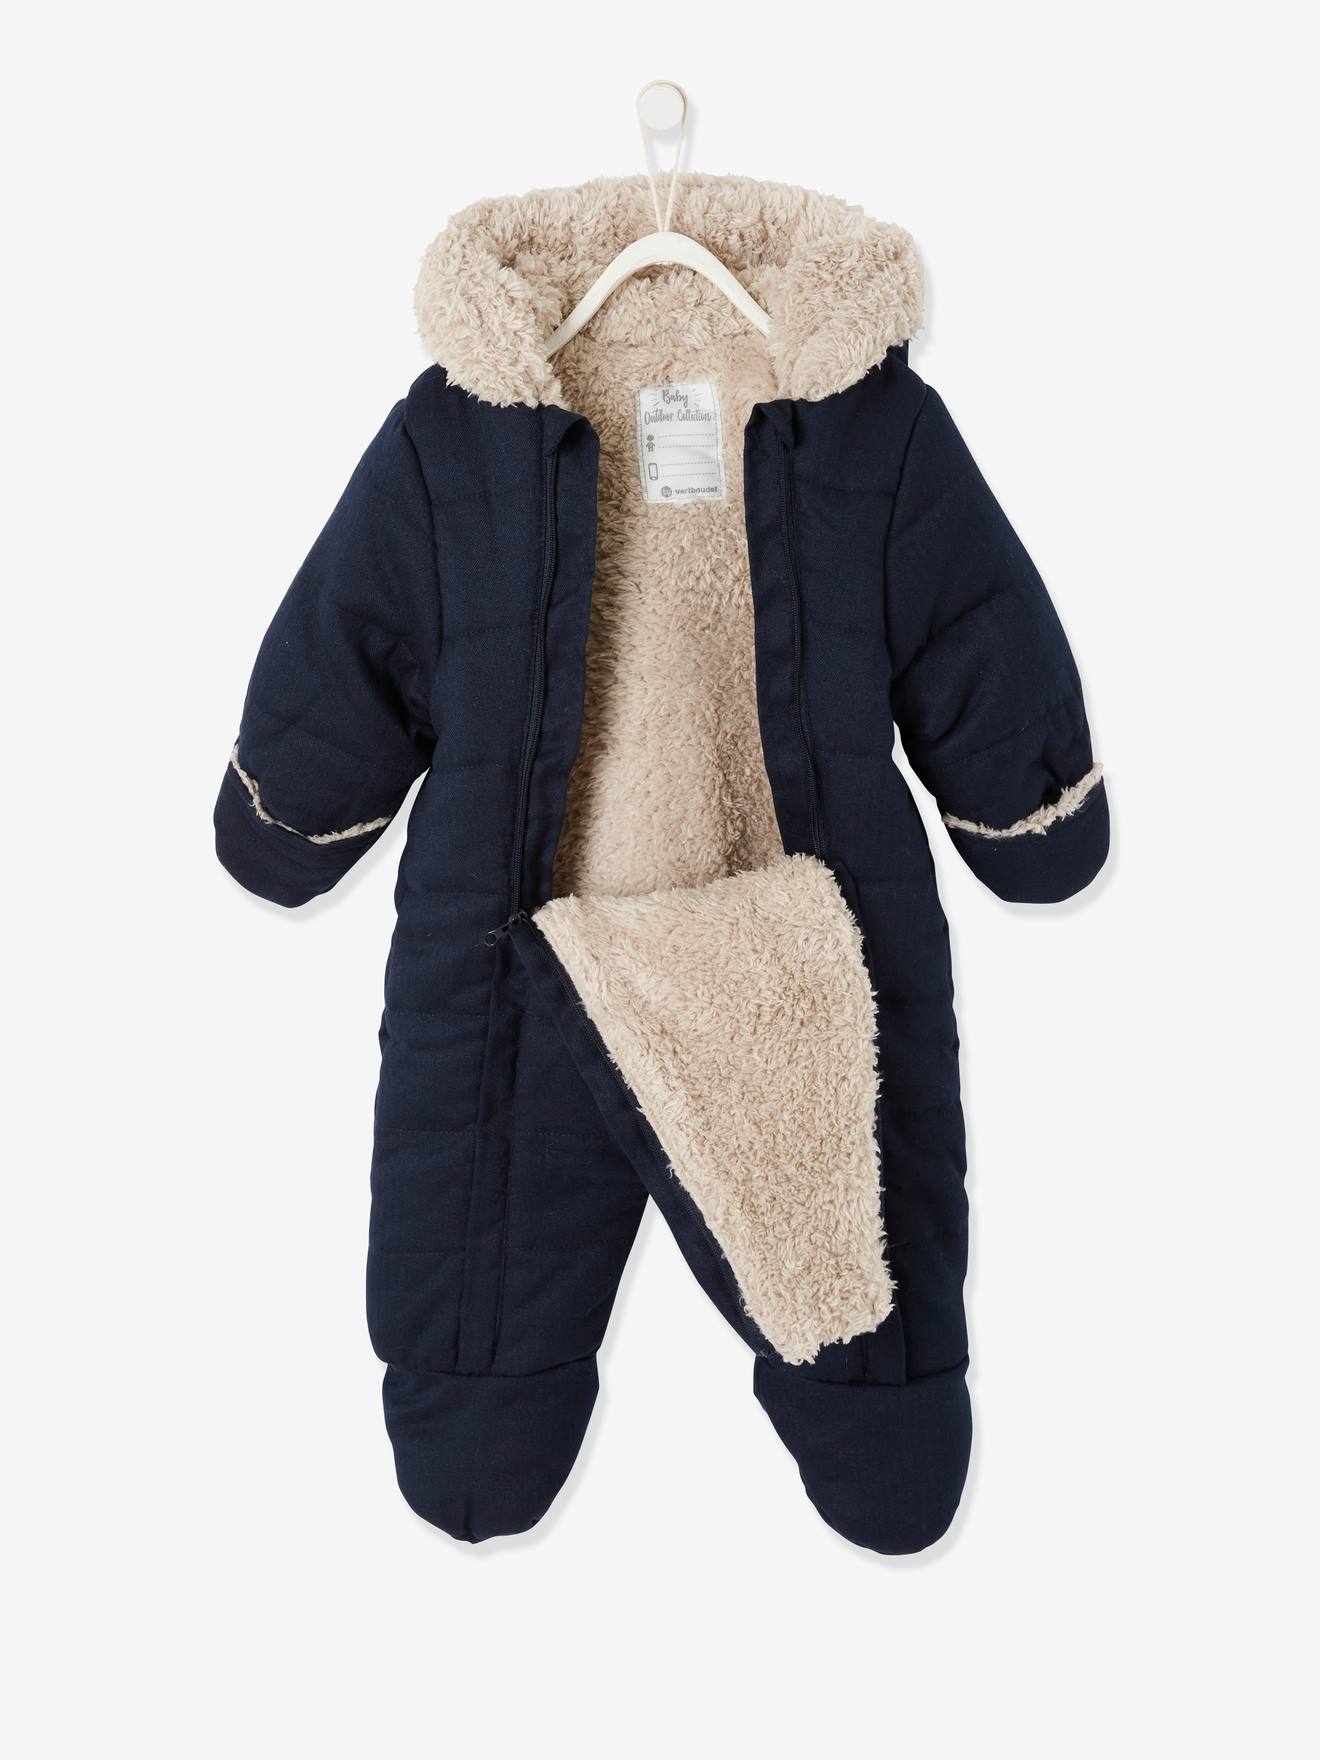 Baby Boys Pramsuit Snowsuit Winter Coat Warm Hooded Fully Lined Velour 